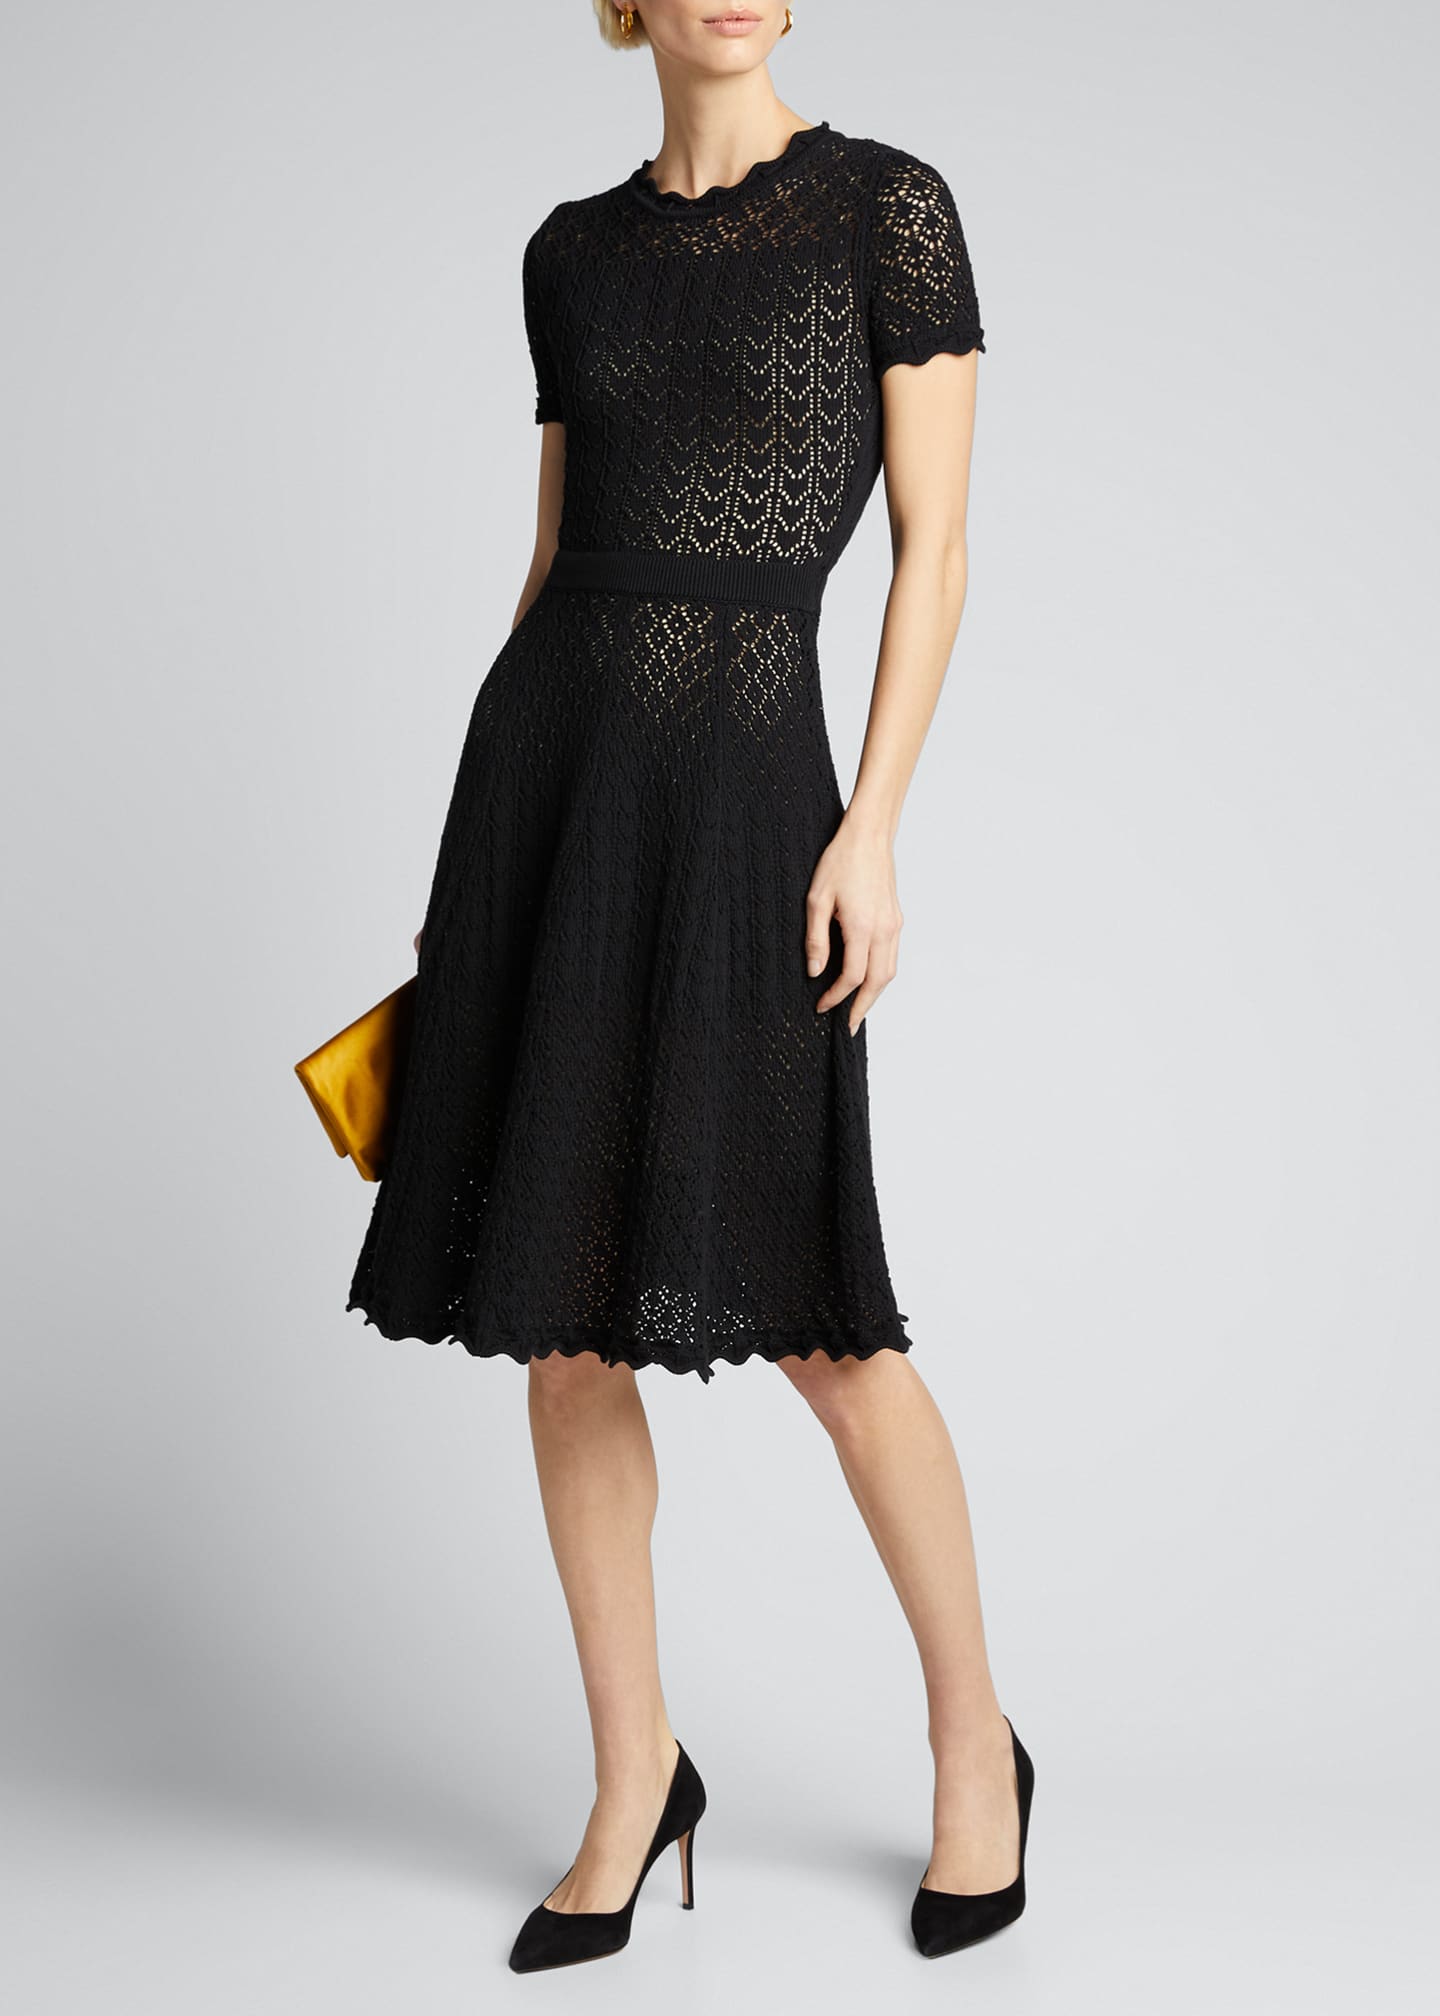 Burberry Short-Sleeve Lace Illusion Dress, Black